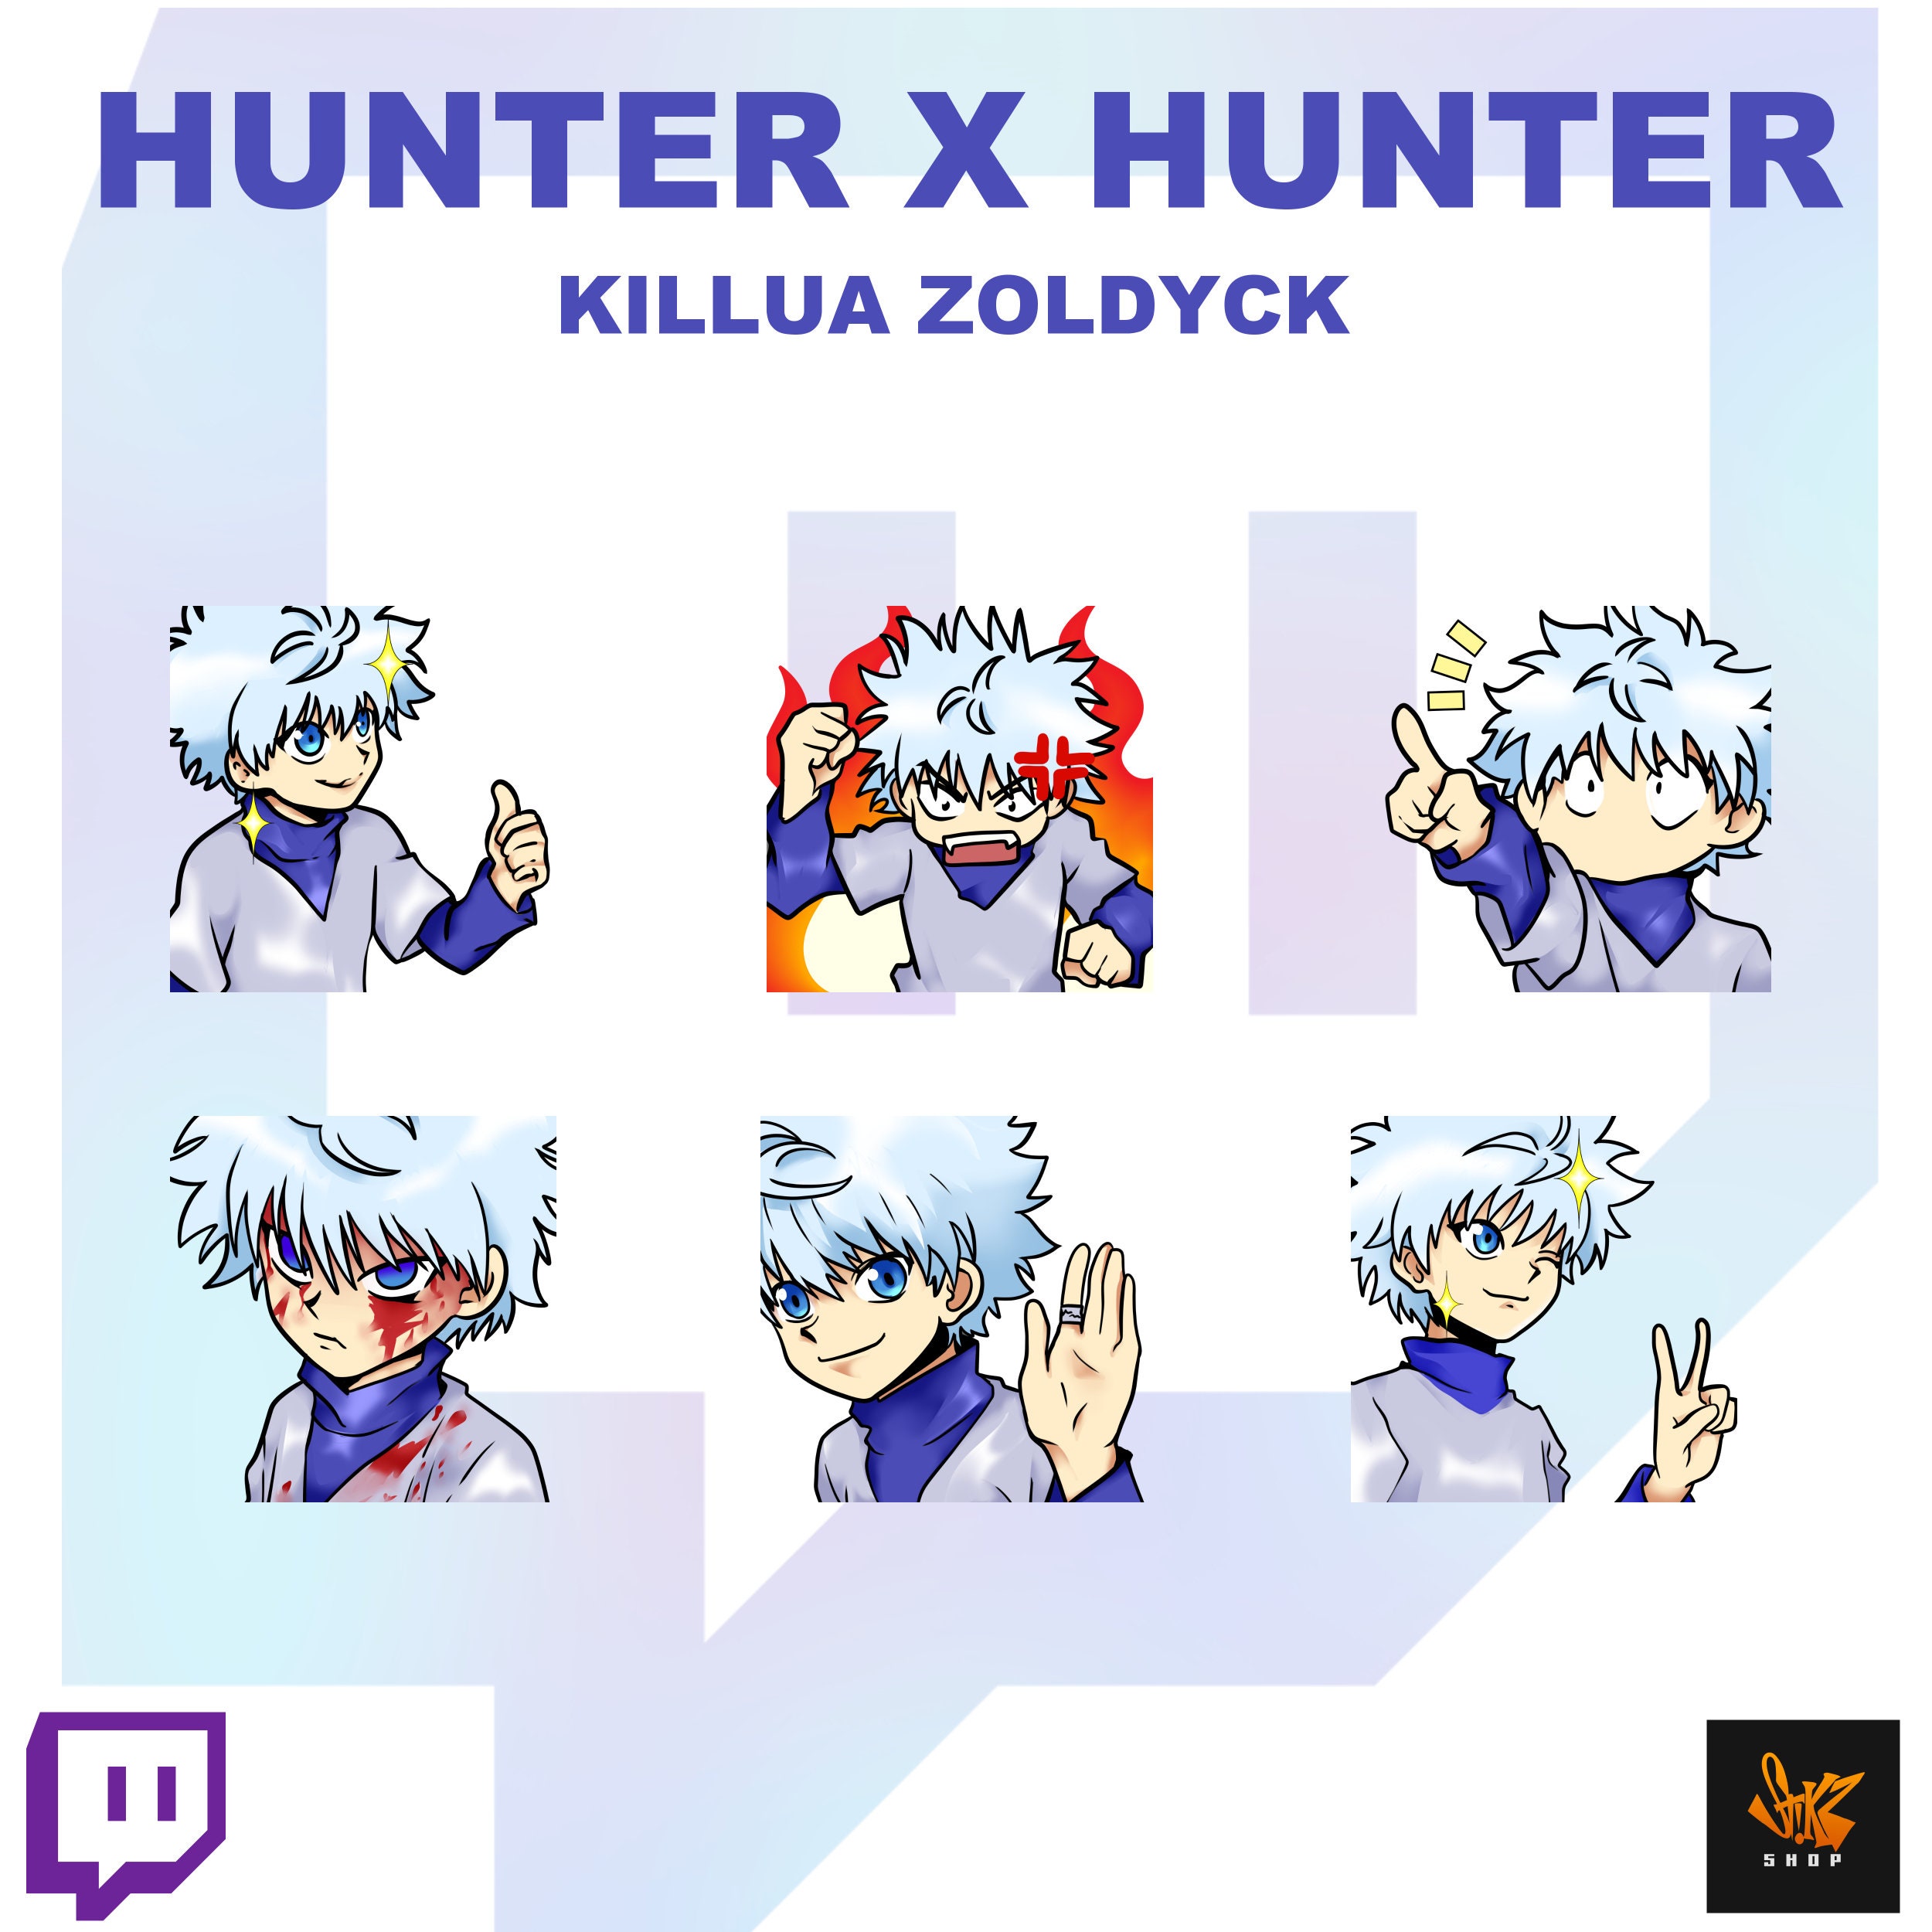 9 X Twitch Anime Emotes Killua Zoldyck From Hunterxhunter Etsy